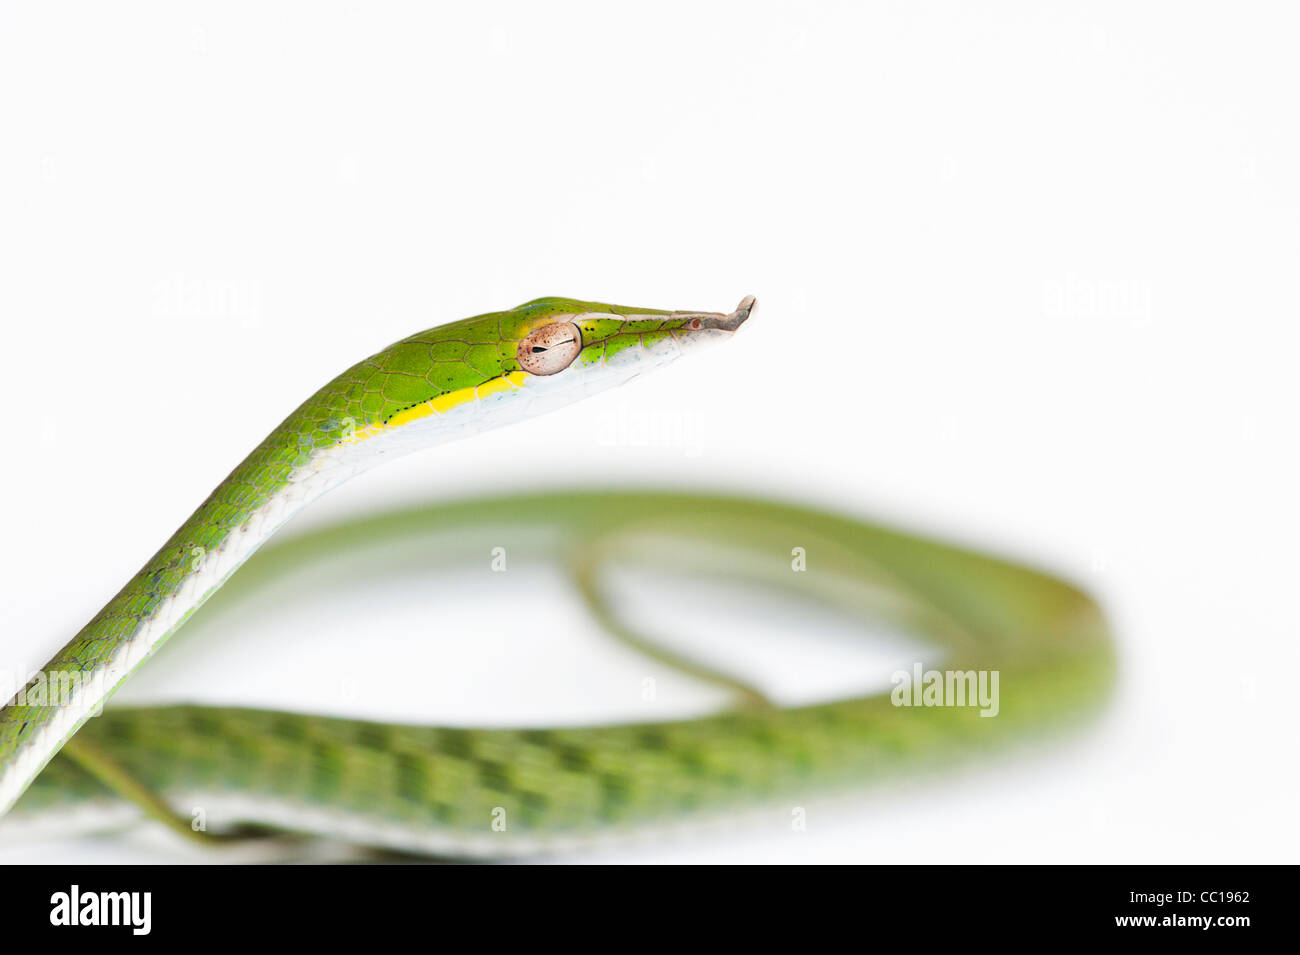 Ahaetulla nasuta . Juvenile Green vine snake on white background Stock Photo